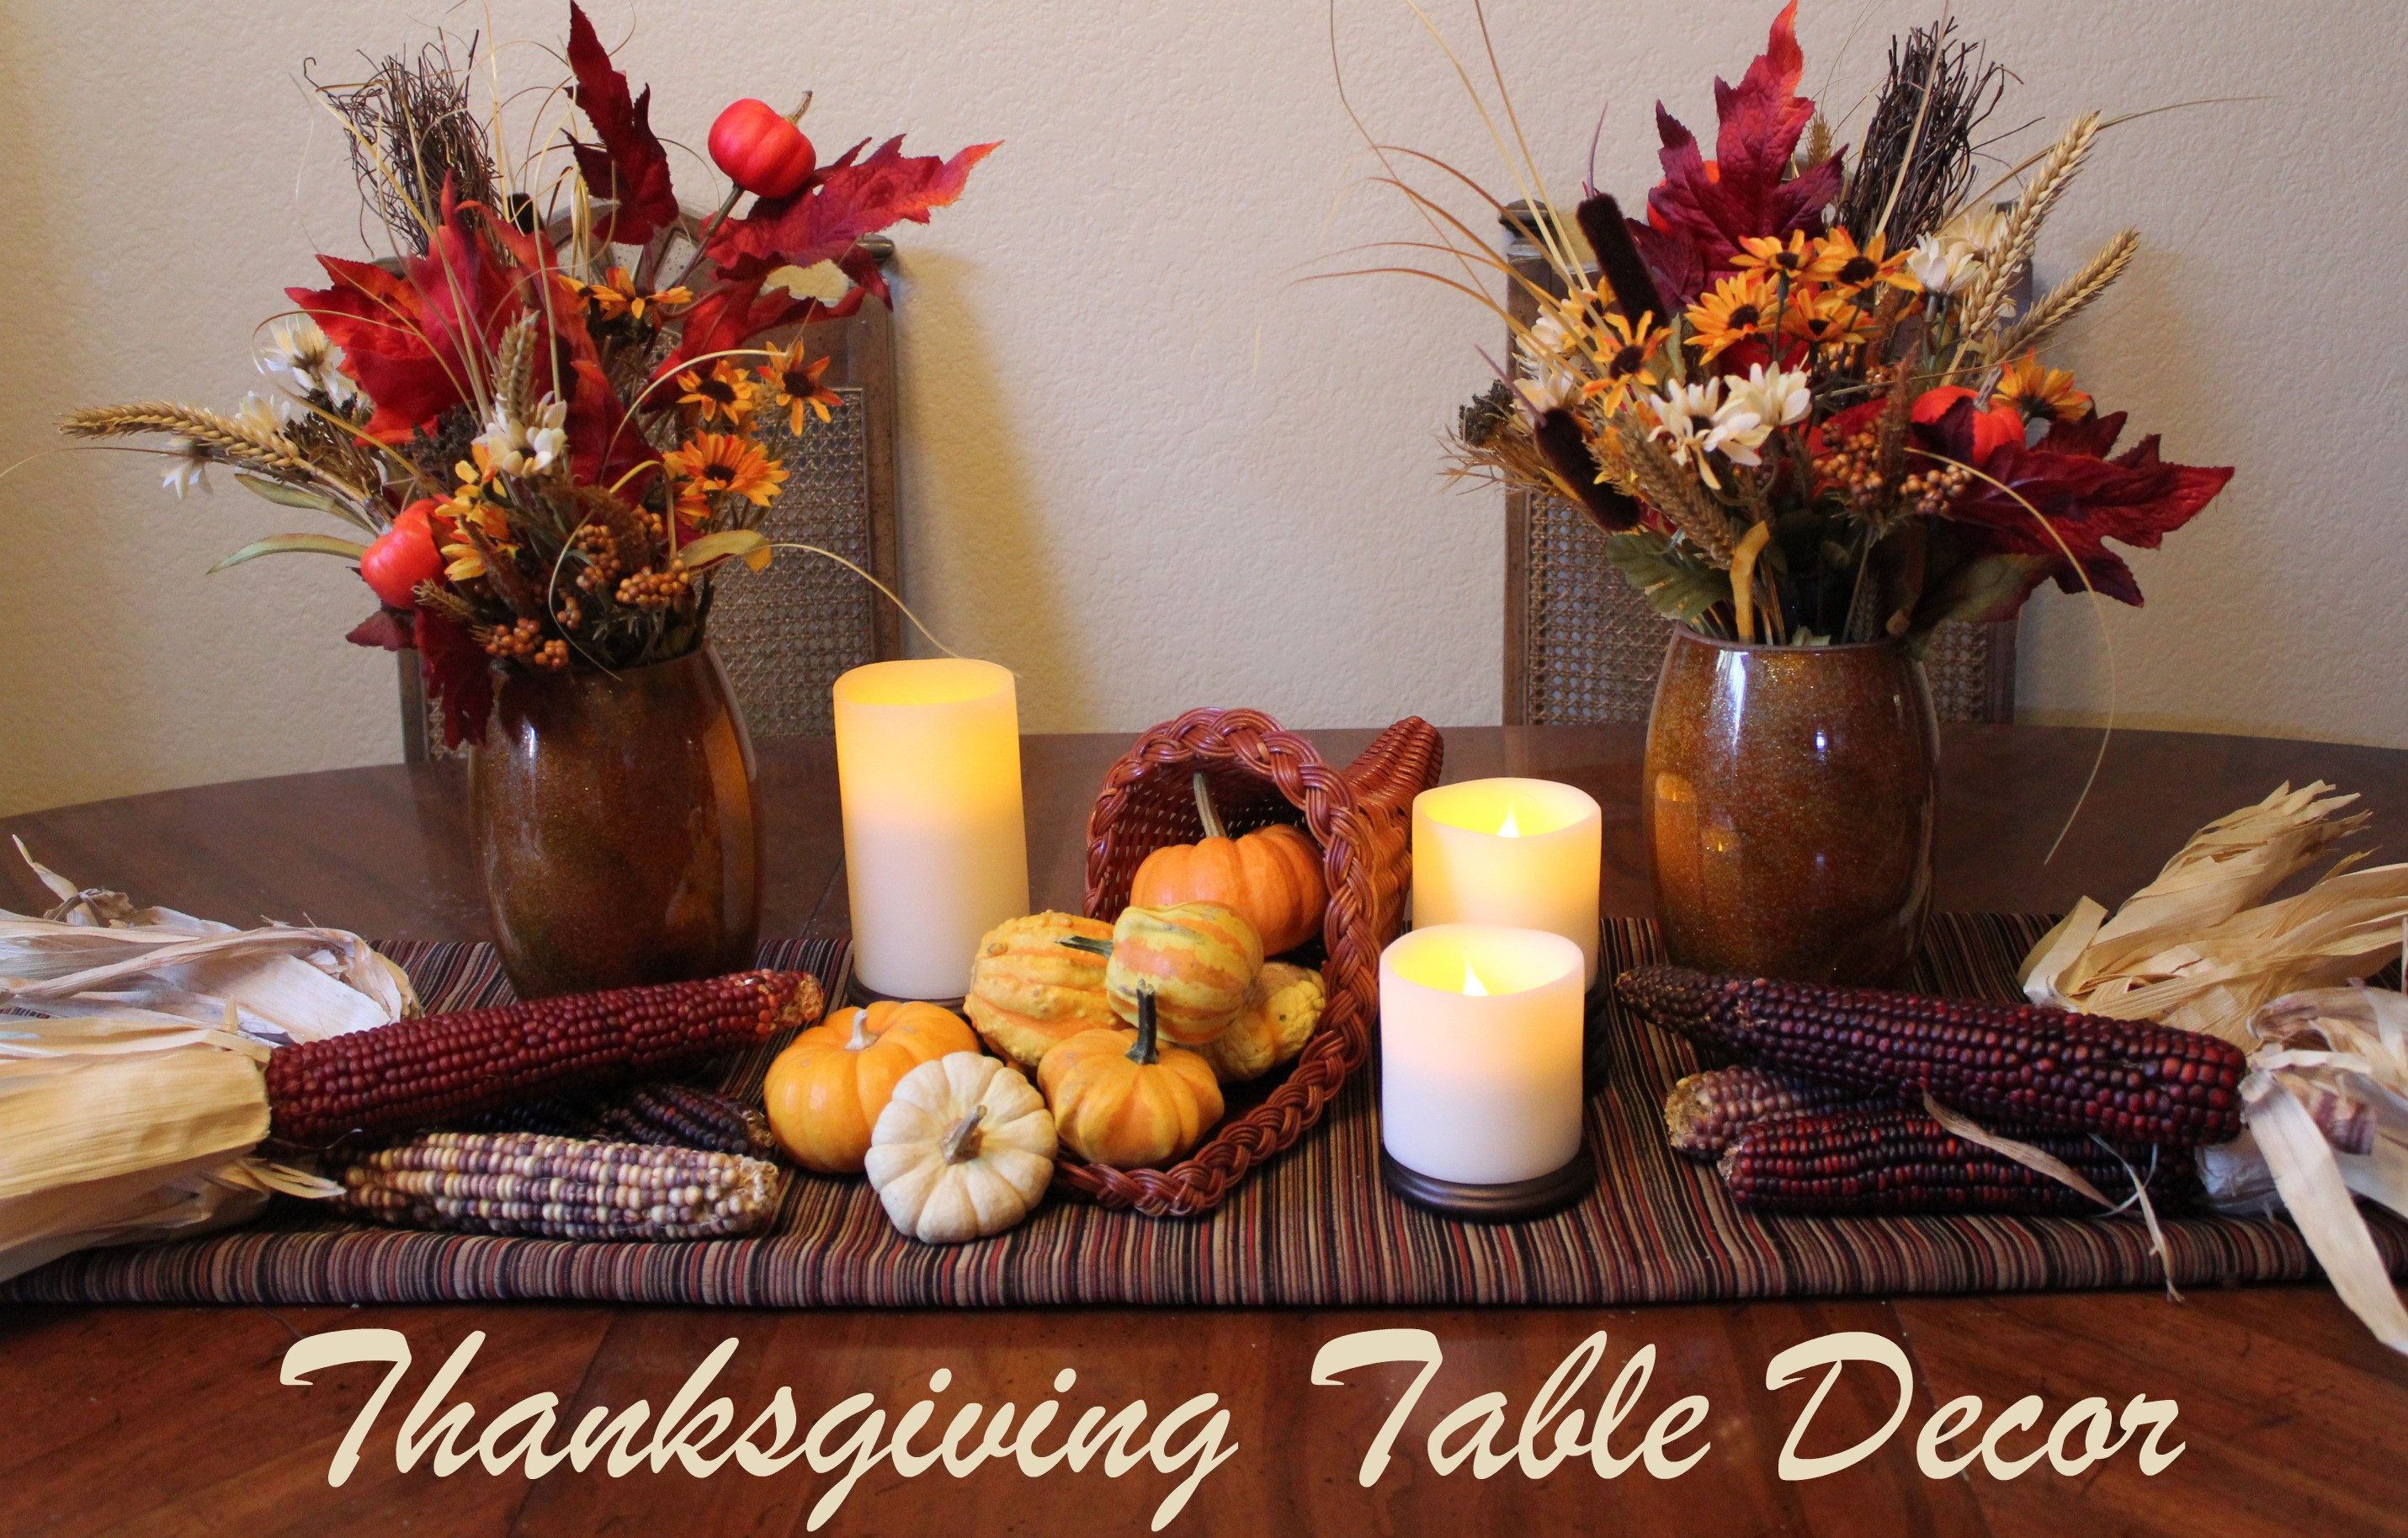 Thanksgiving Table Decor
 Cornucopia of Creativity DIY Thanksgiving Table Decor